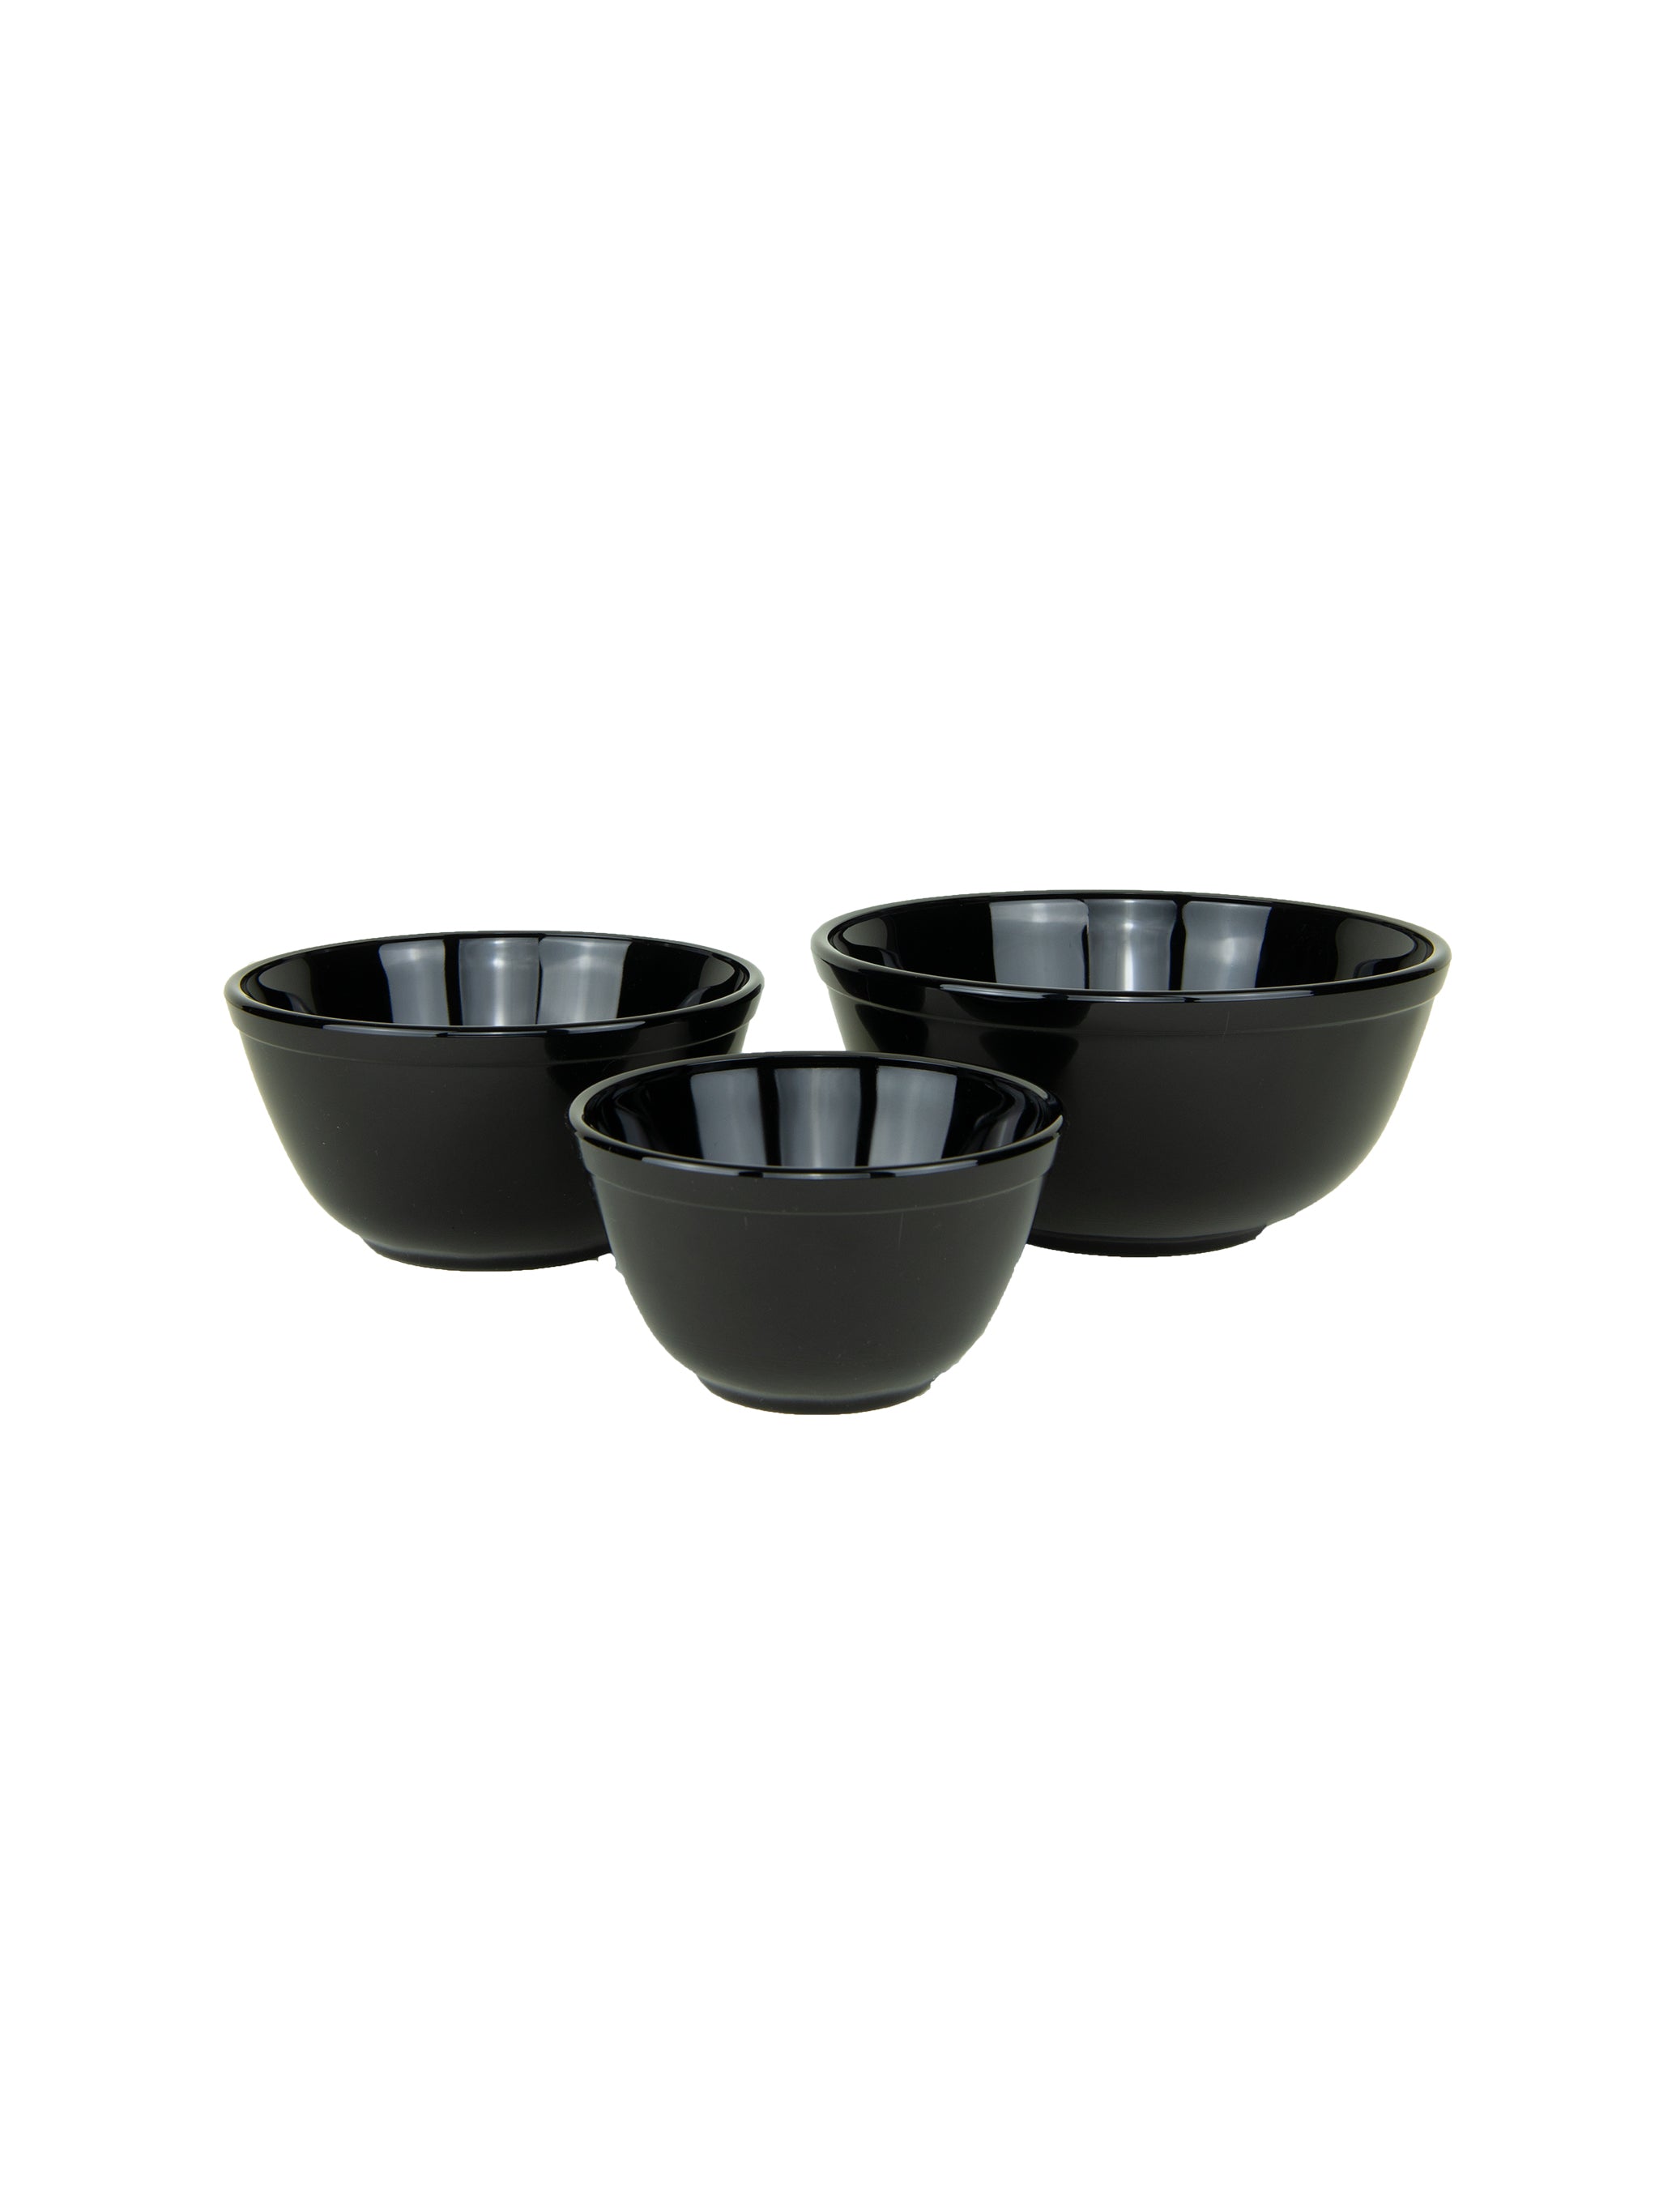 Mosser Glass 3-Piece Mixing Bowl Set (20oz, 40oz, 60oz) | Black Raspberry